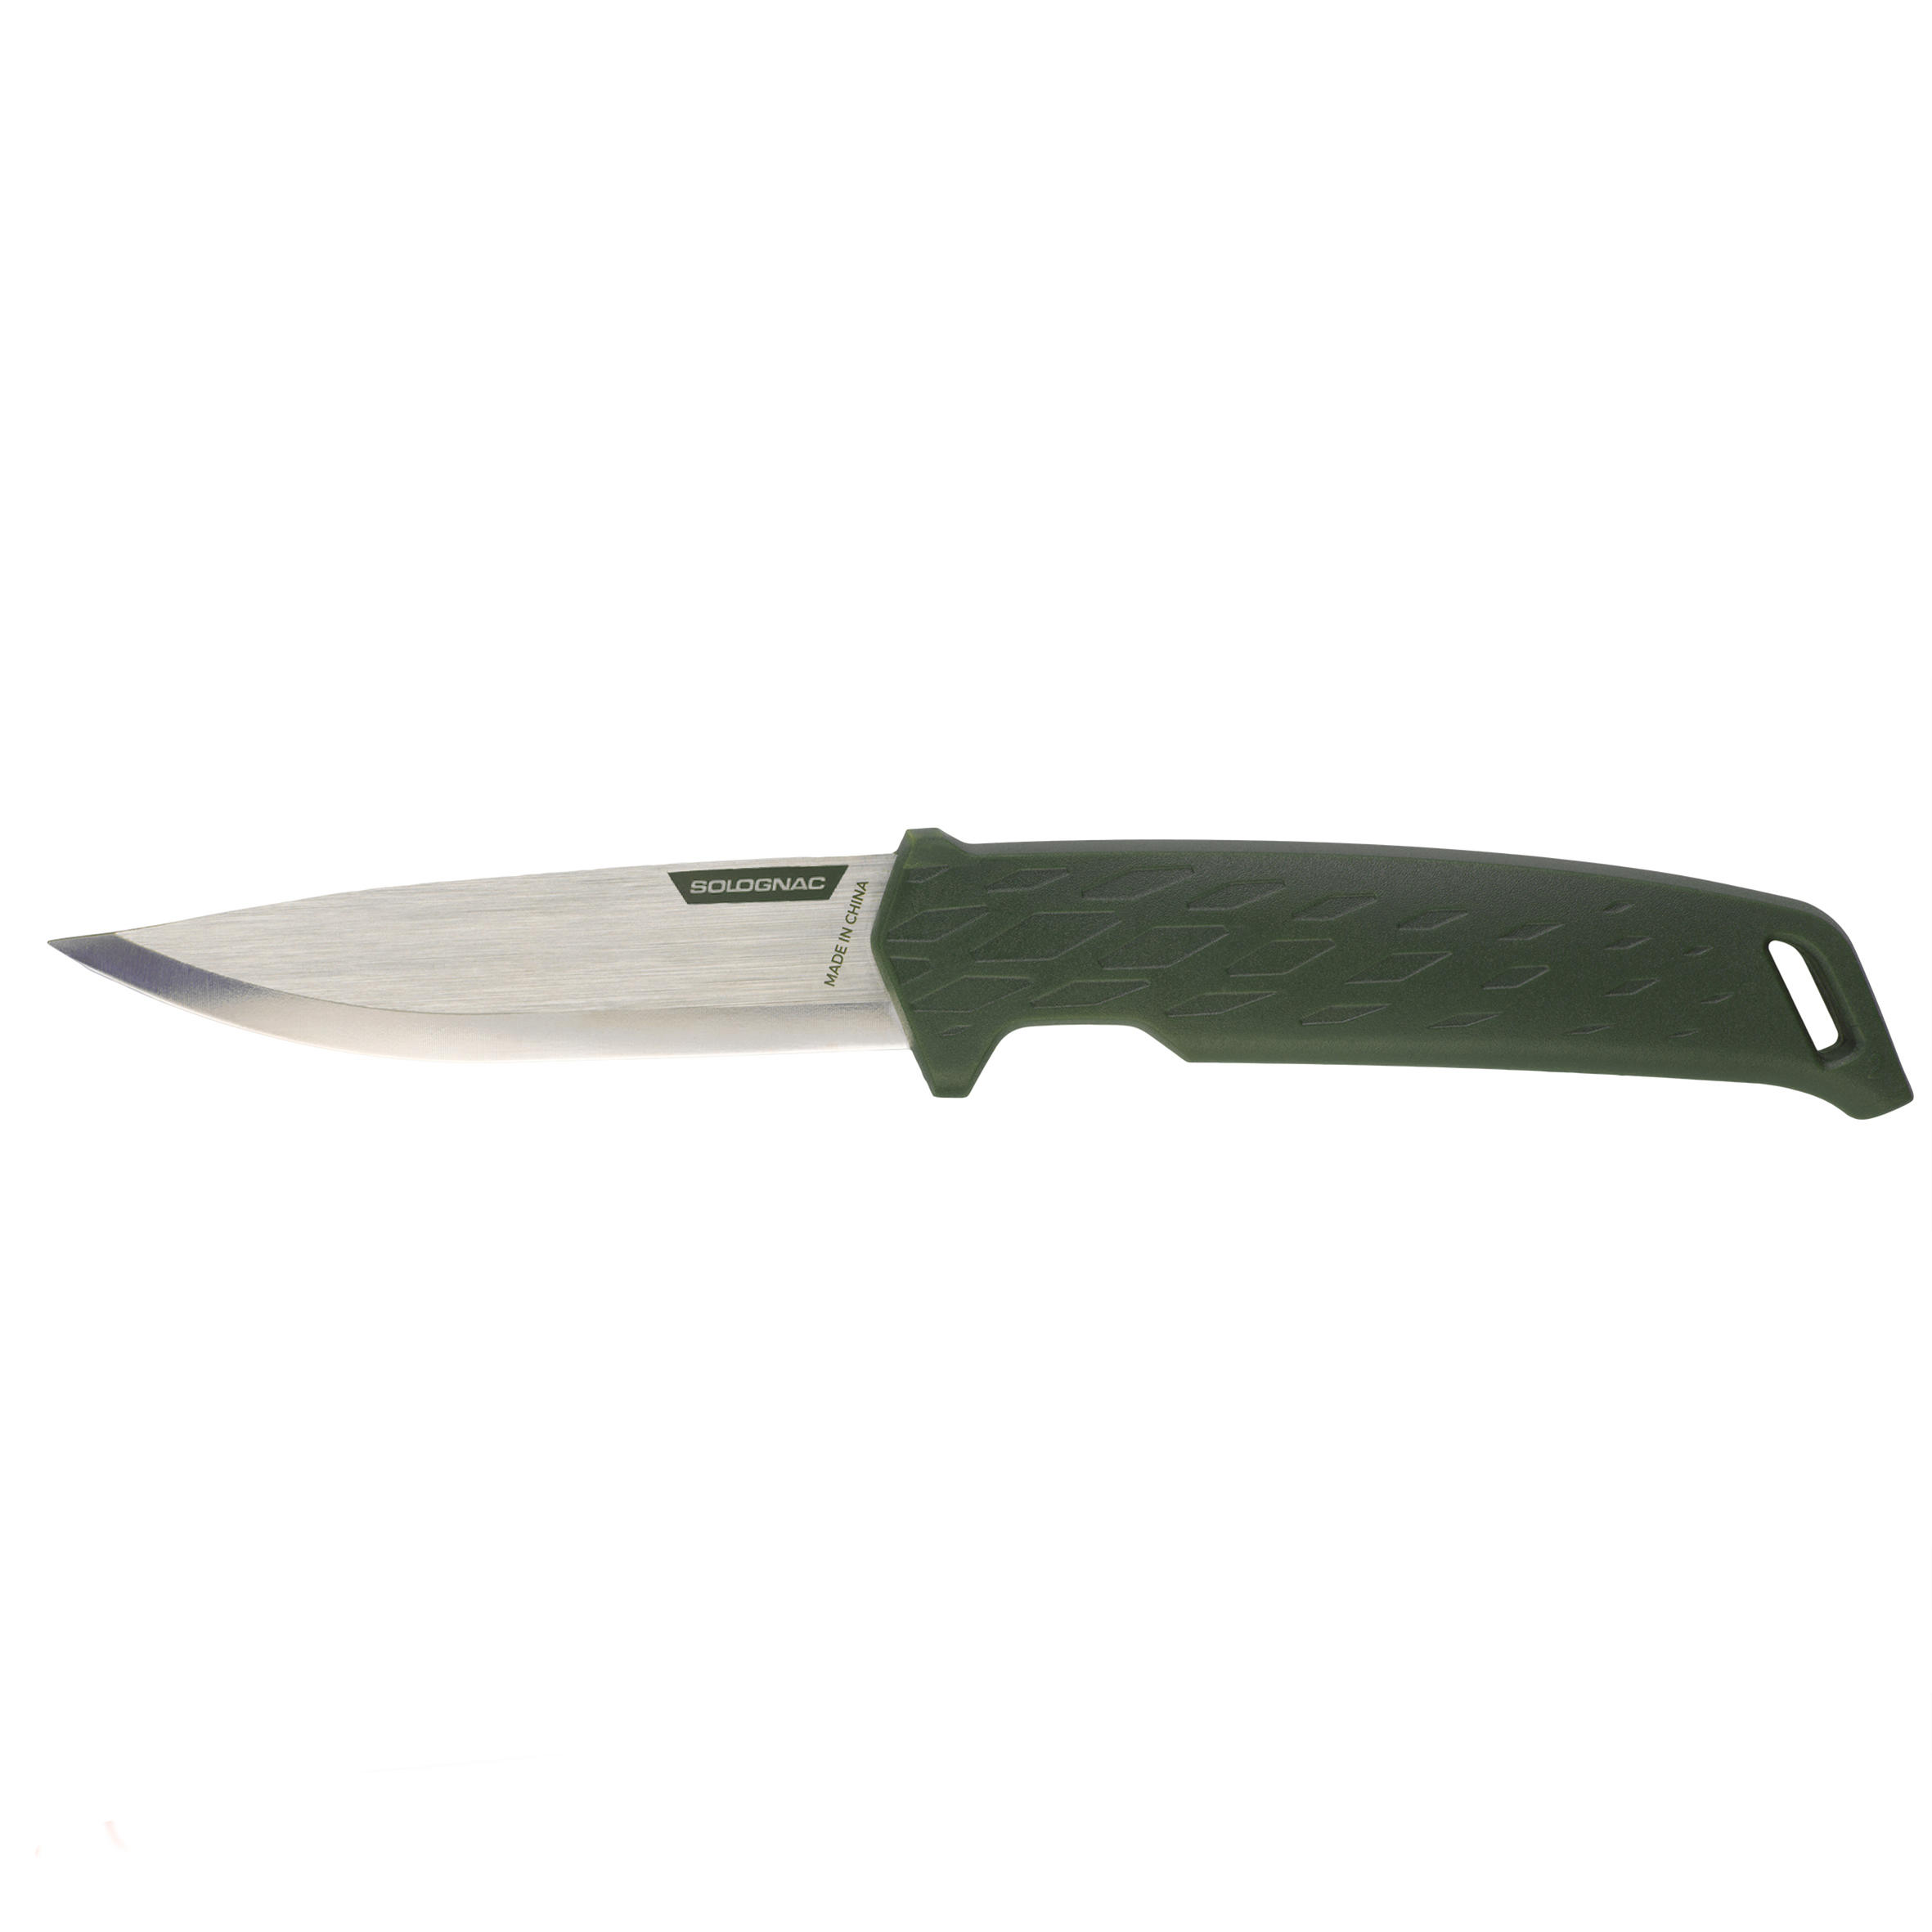 Sika 100 hunting knife - SOLOGNAC